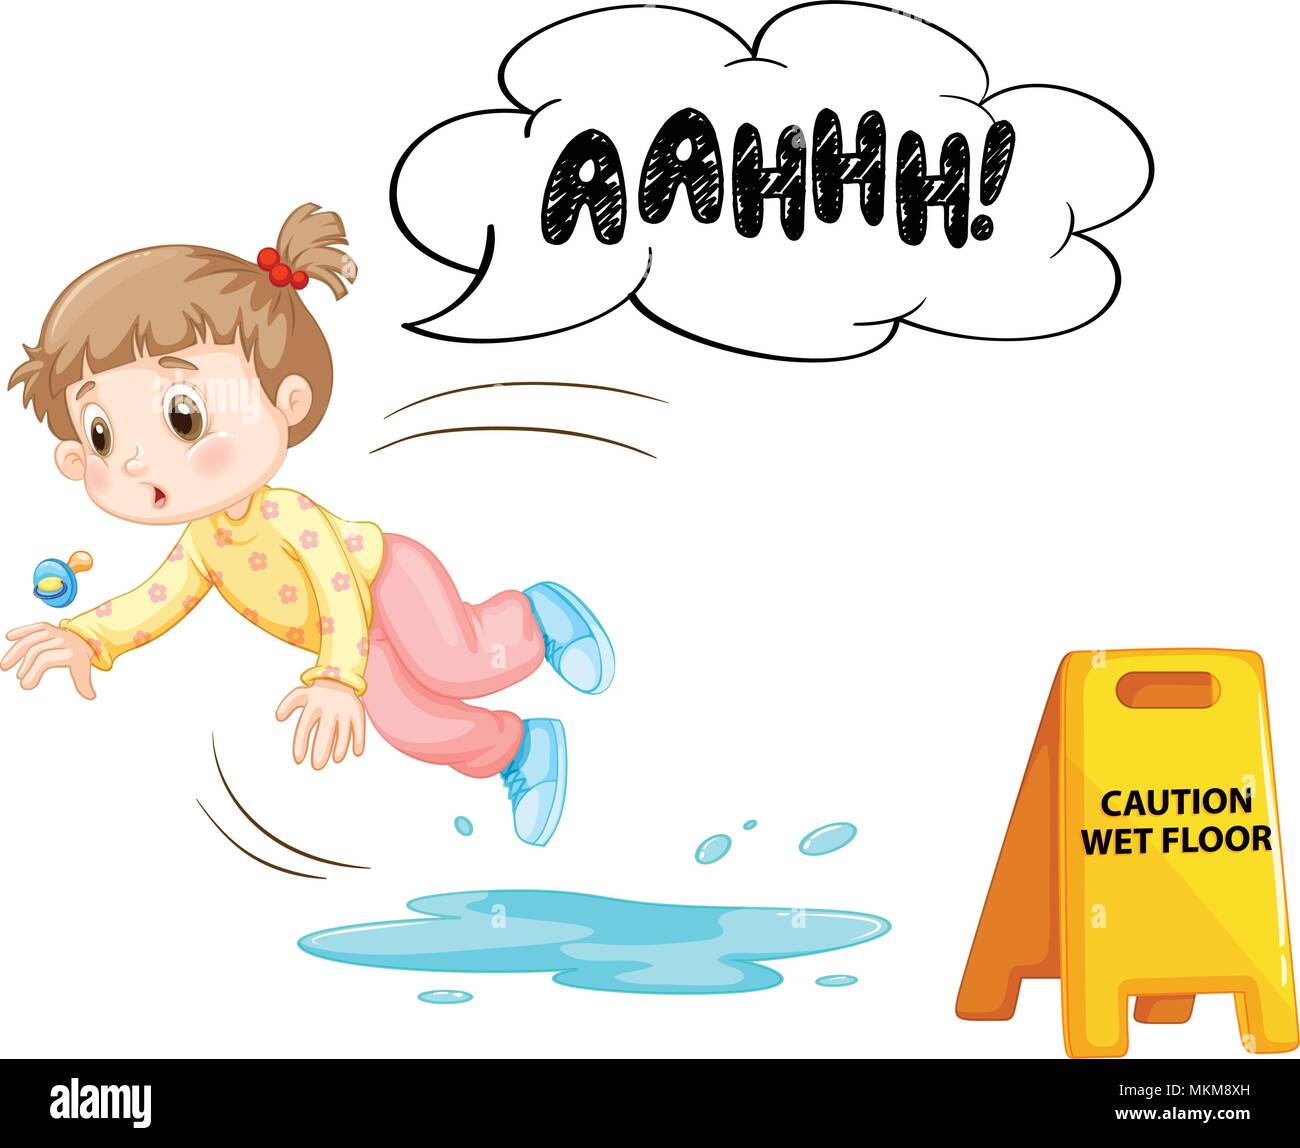 A Kid Slipping On Wet Floor illustration Stock Vector